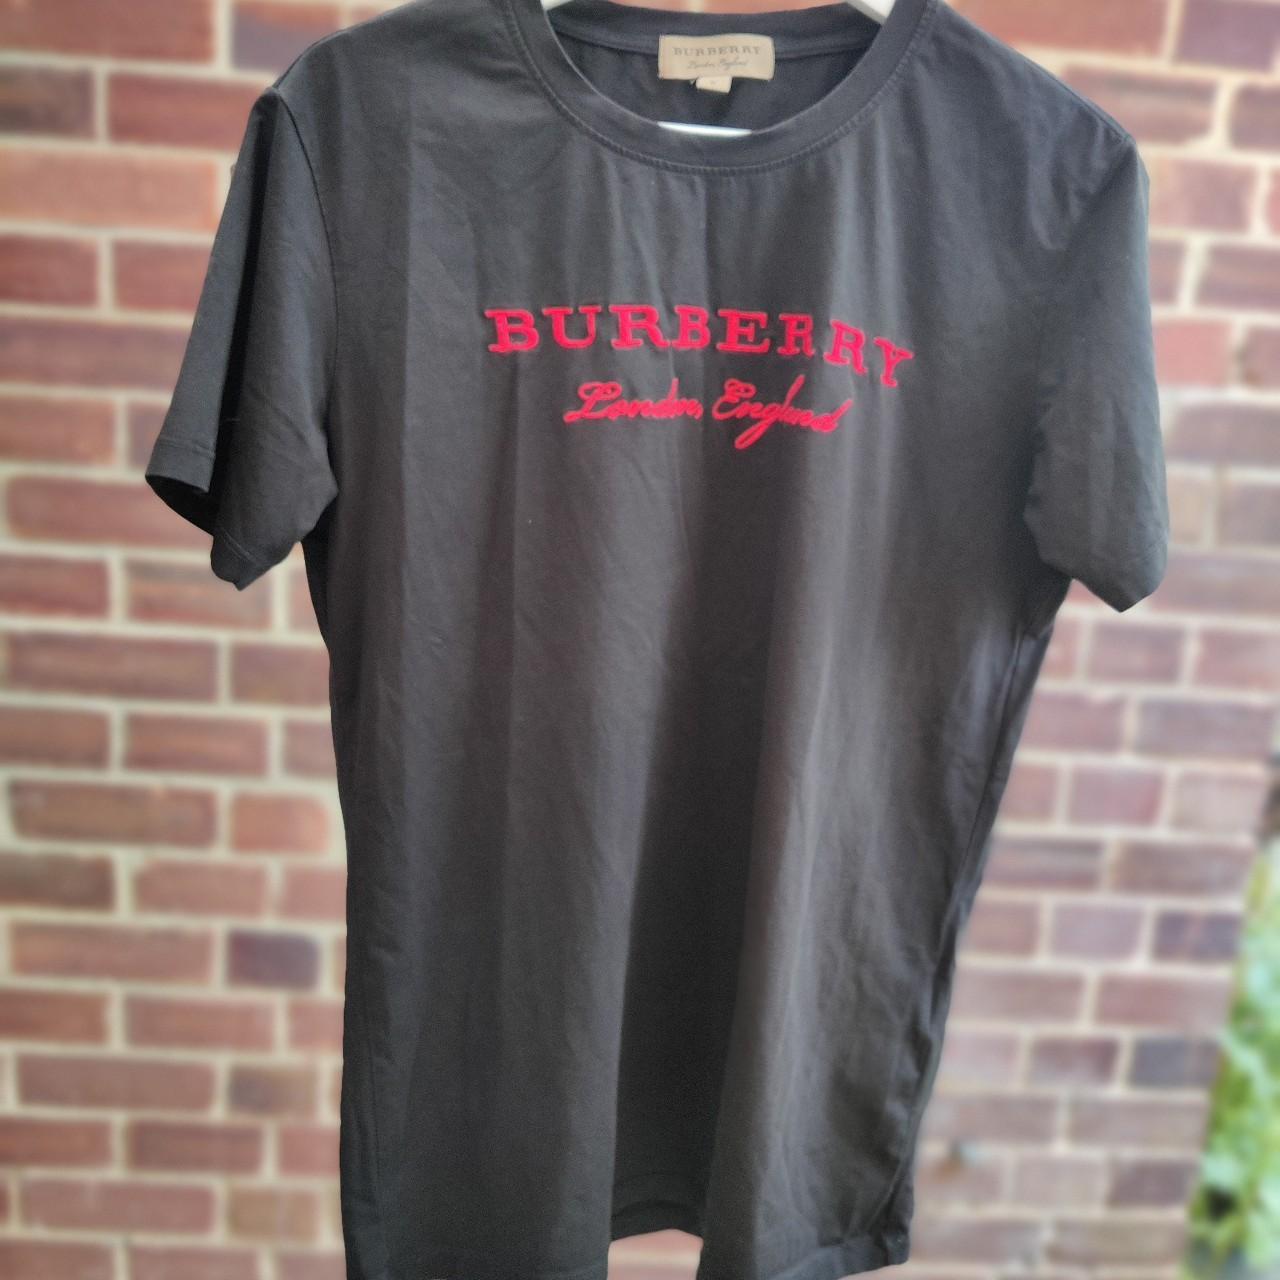 Burberry men's black/red logo/monogram t-shirt. - Depop